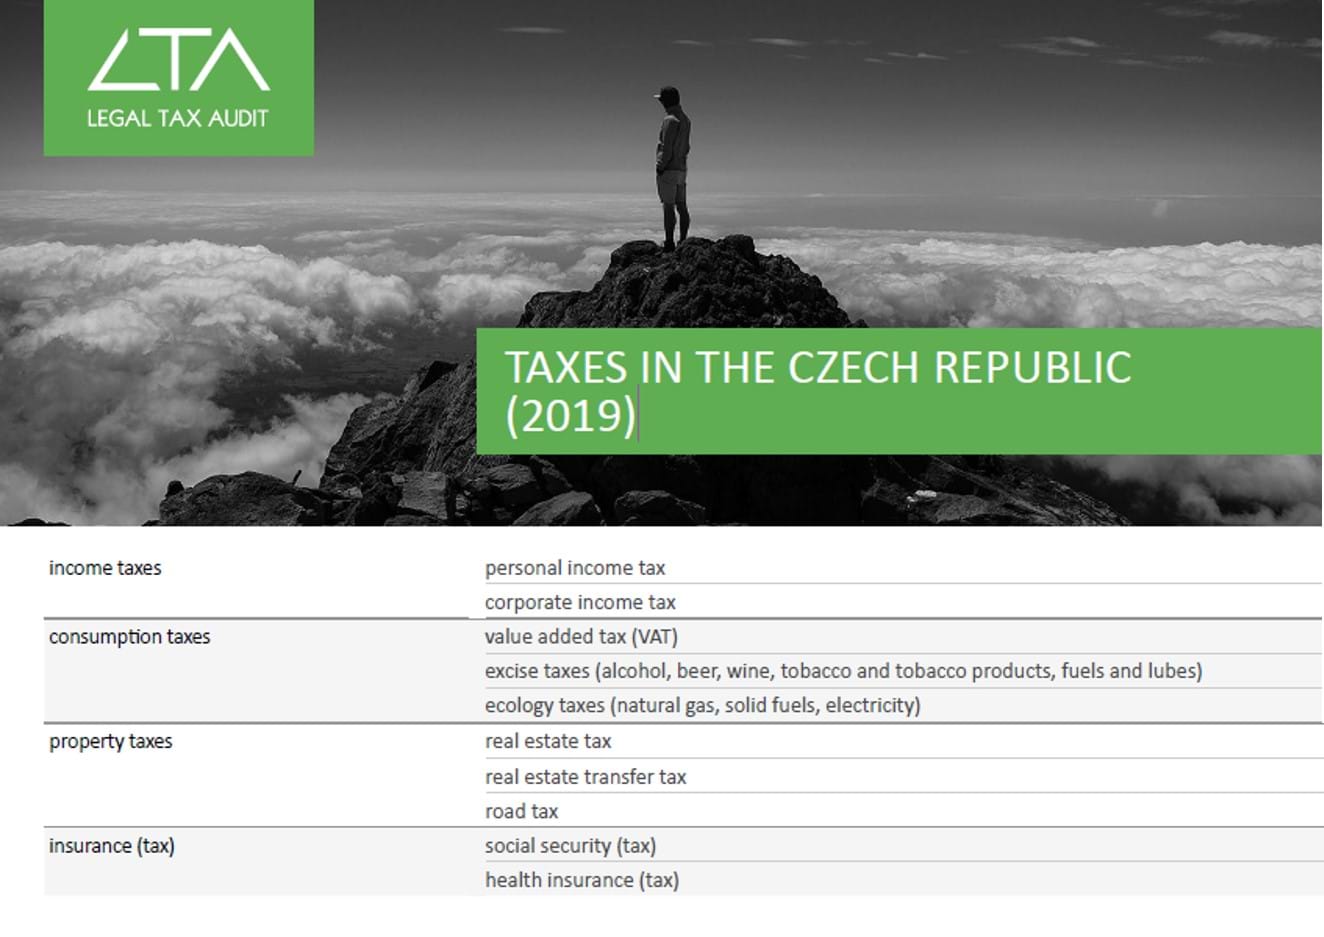 lta-taxes-in-the-czech-republic-guide_518x362.jpg